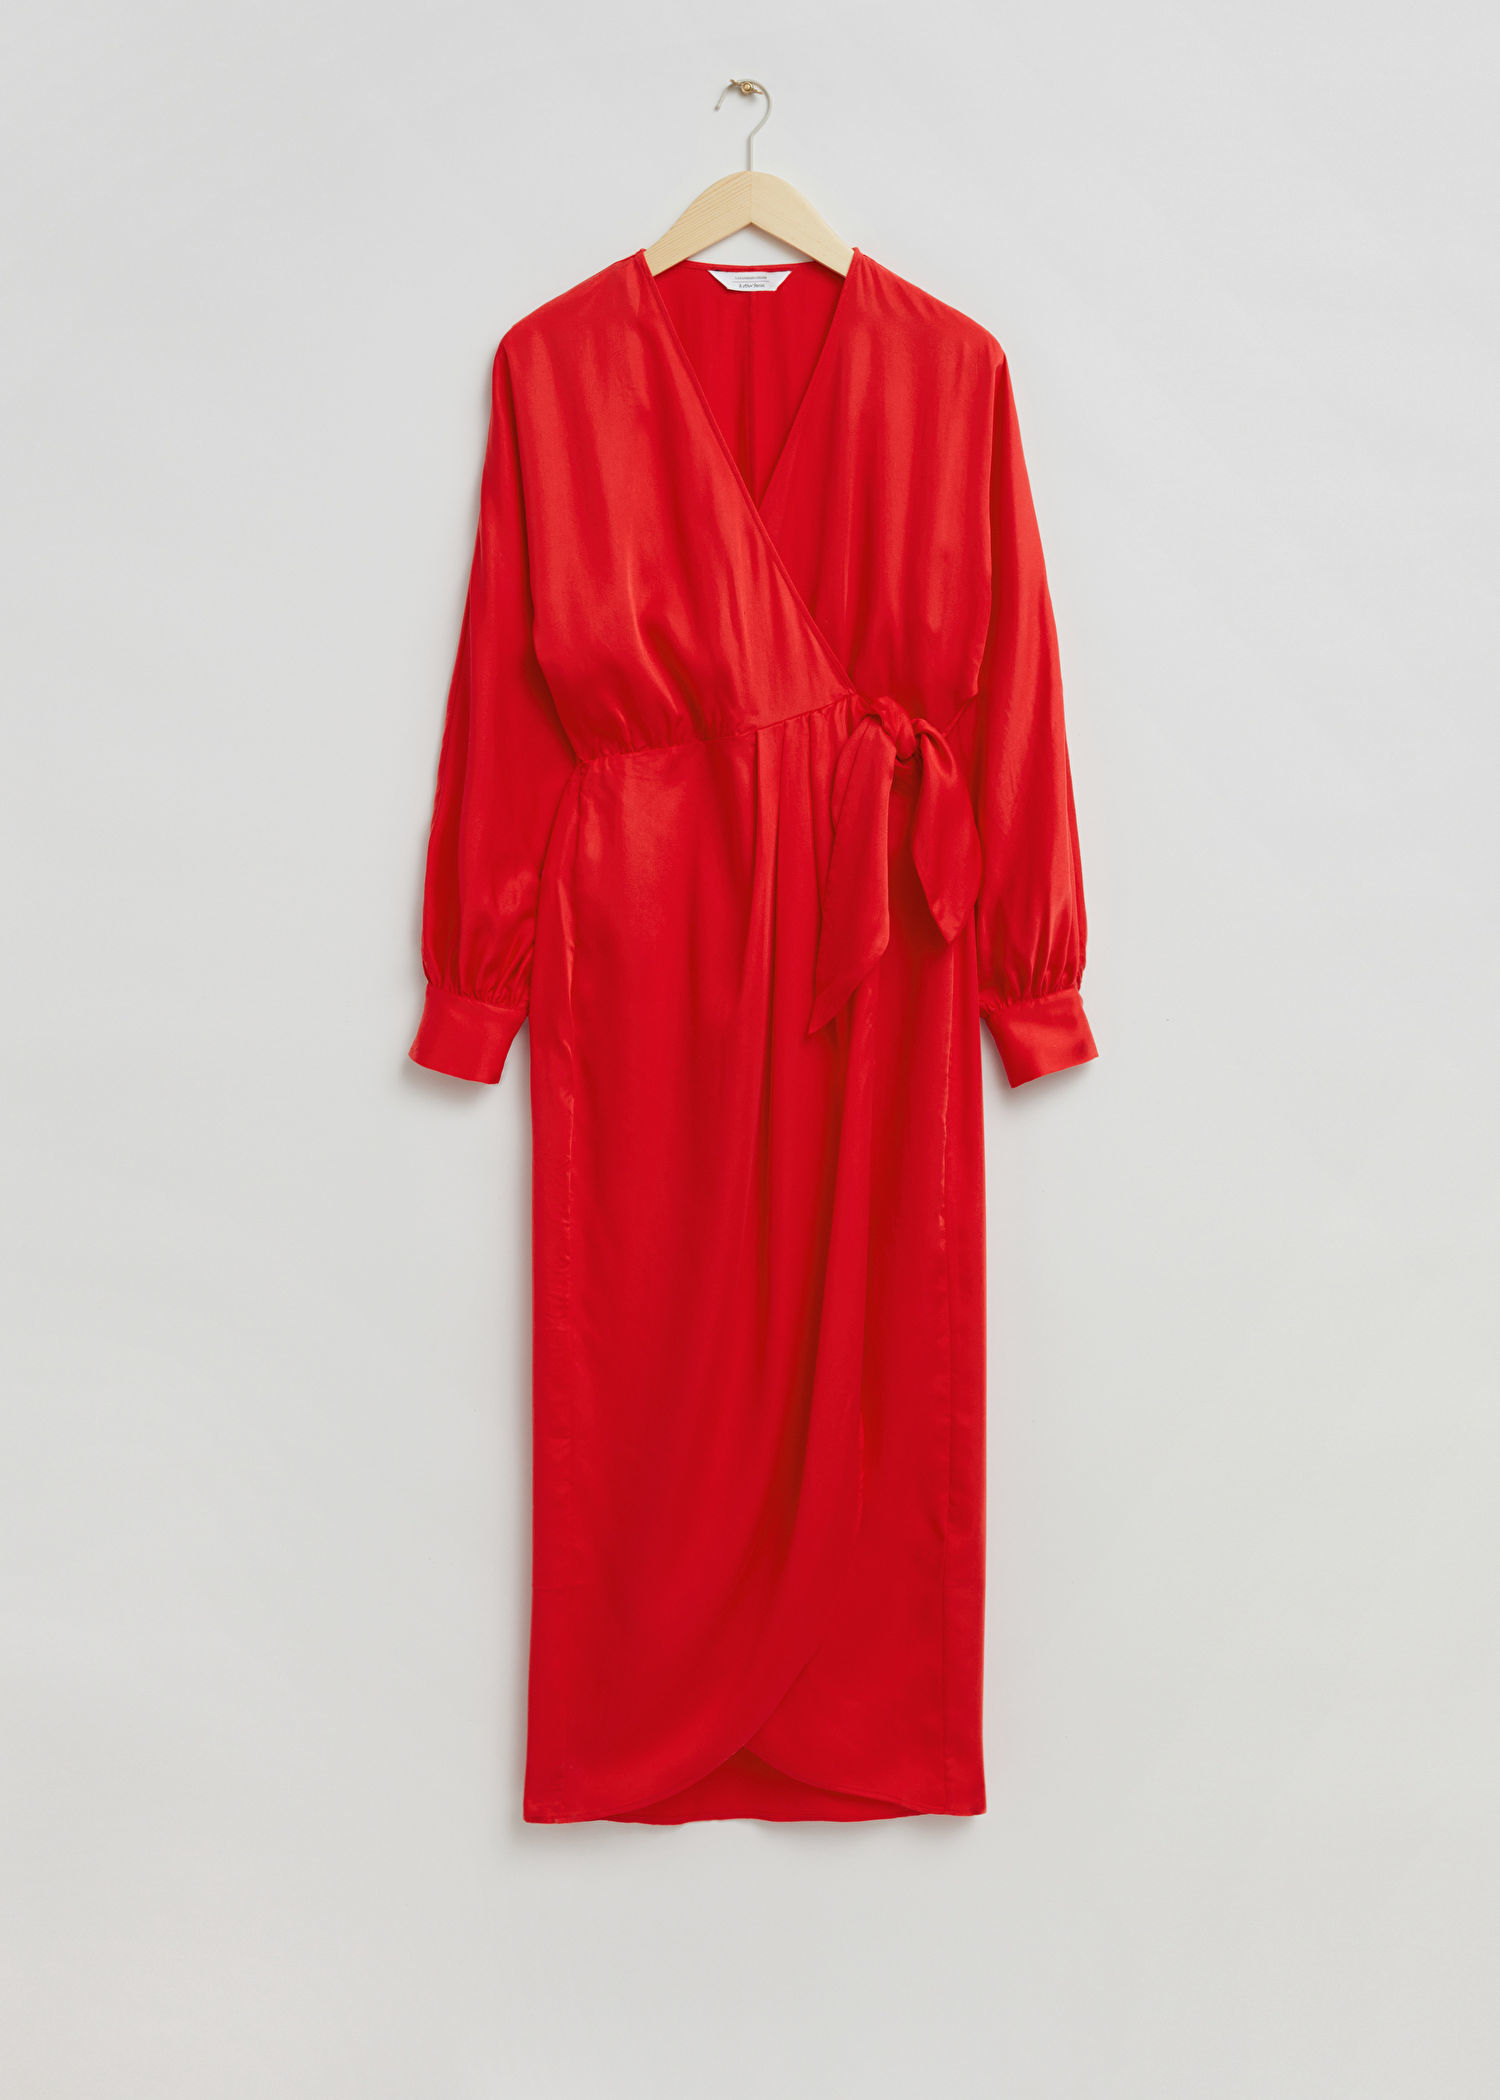 Vestido wrap rojo de Other Stories (129 euros).